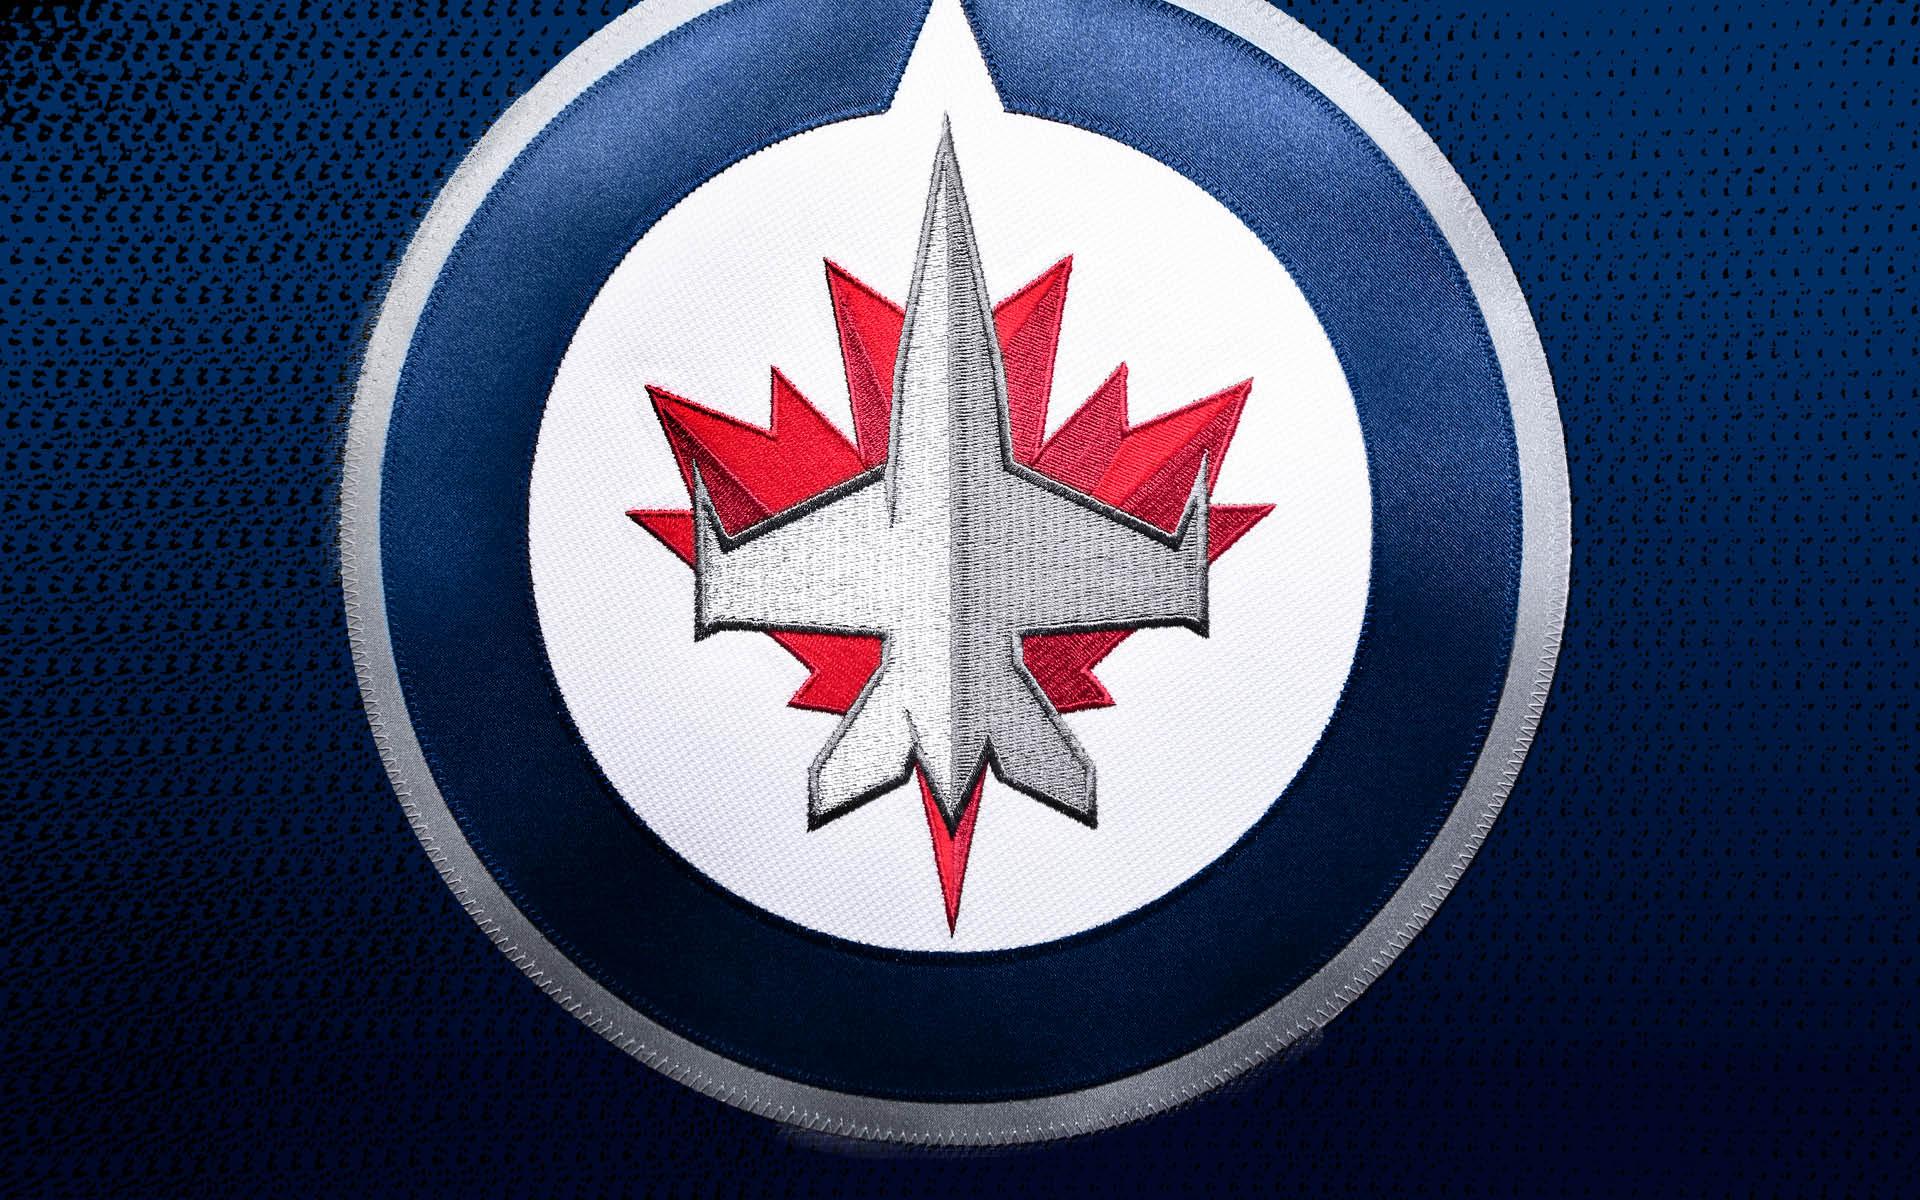 Winnipeg Jets Logo - Desktop & Mobile Wallpaper